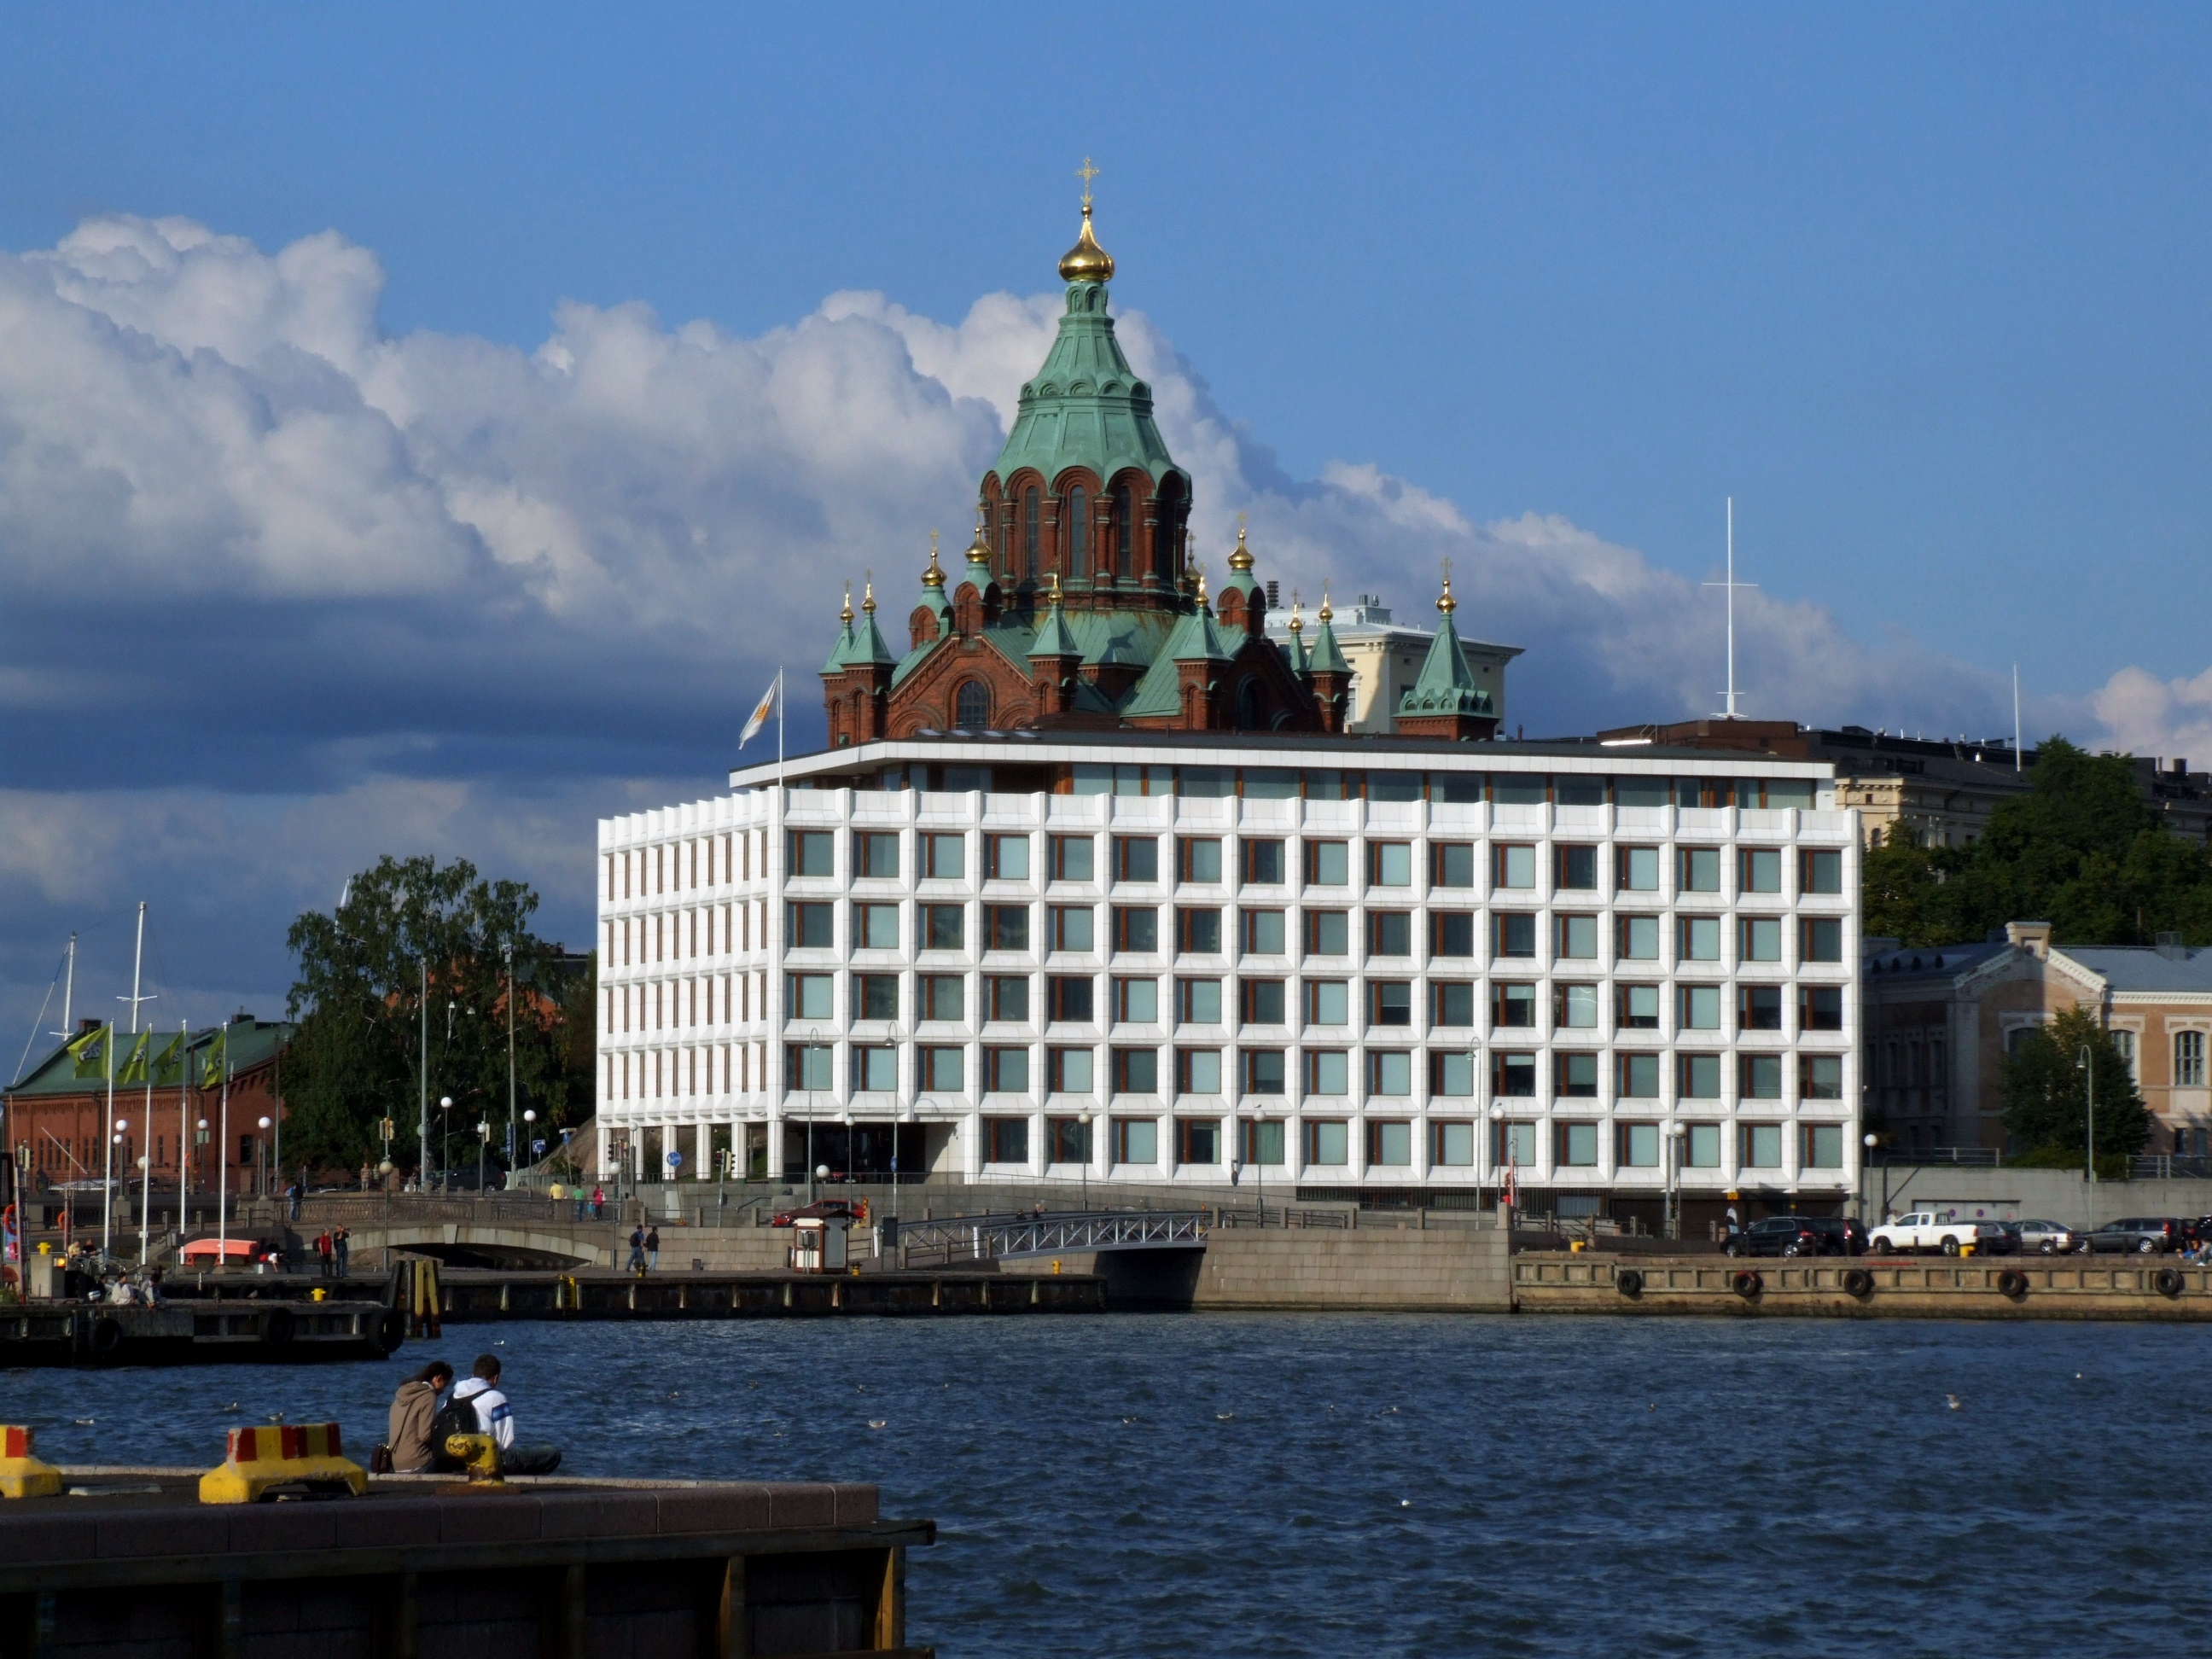 Stora Enso headquarters and Uspensky Cathedral, Helsinki (Helsingfors)